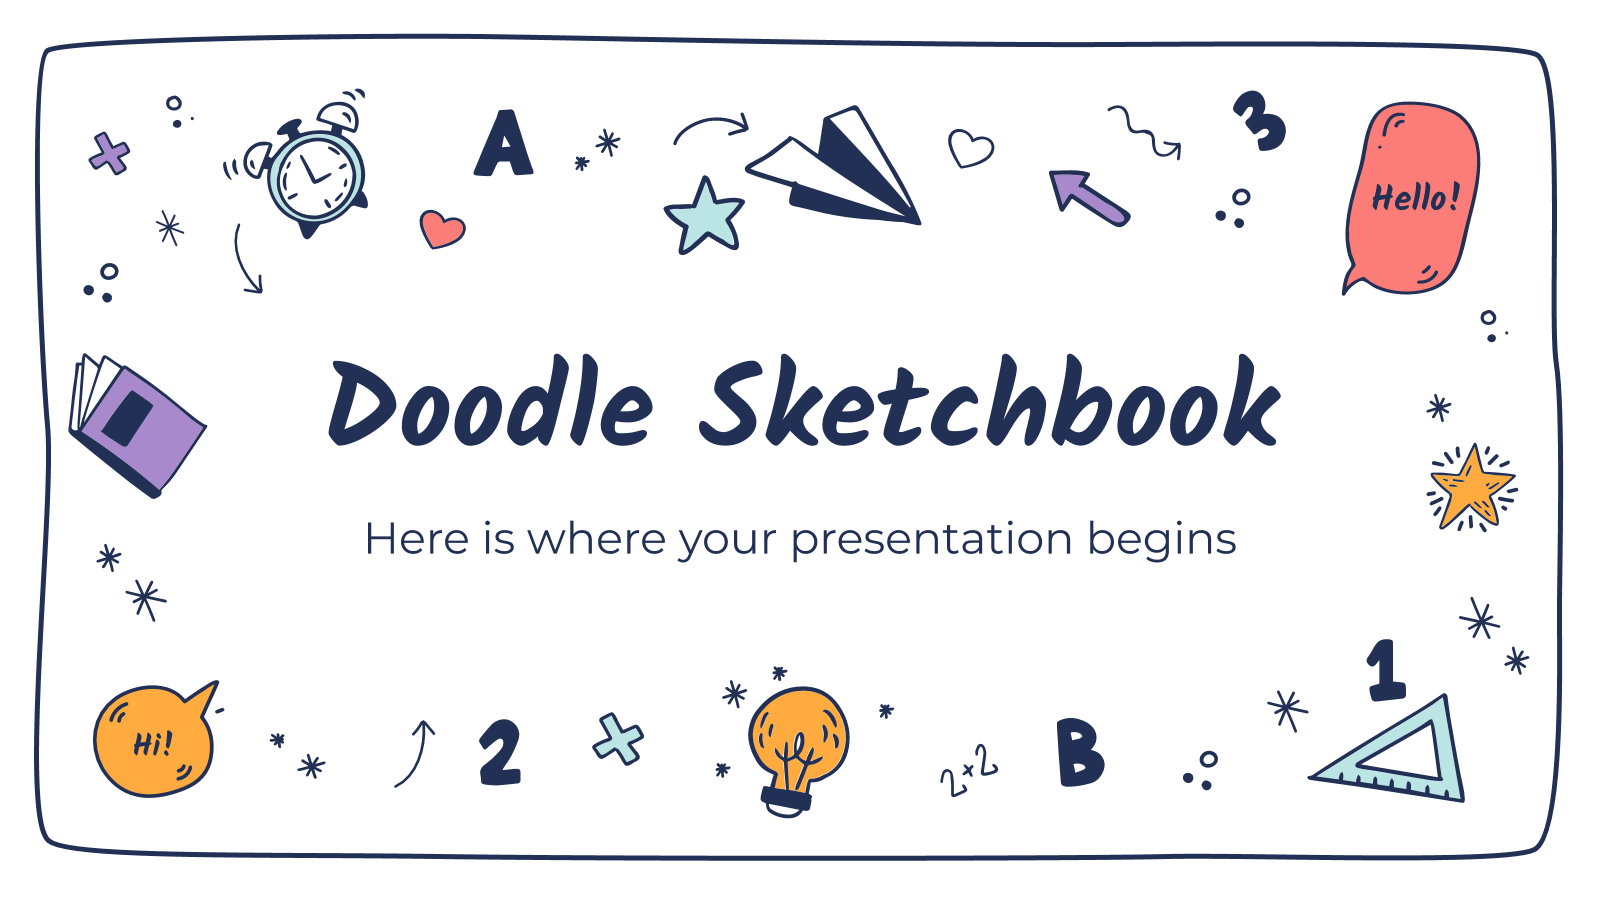 Doodle Sketchbook Powerpoint template